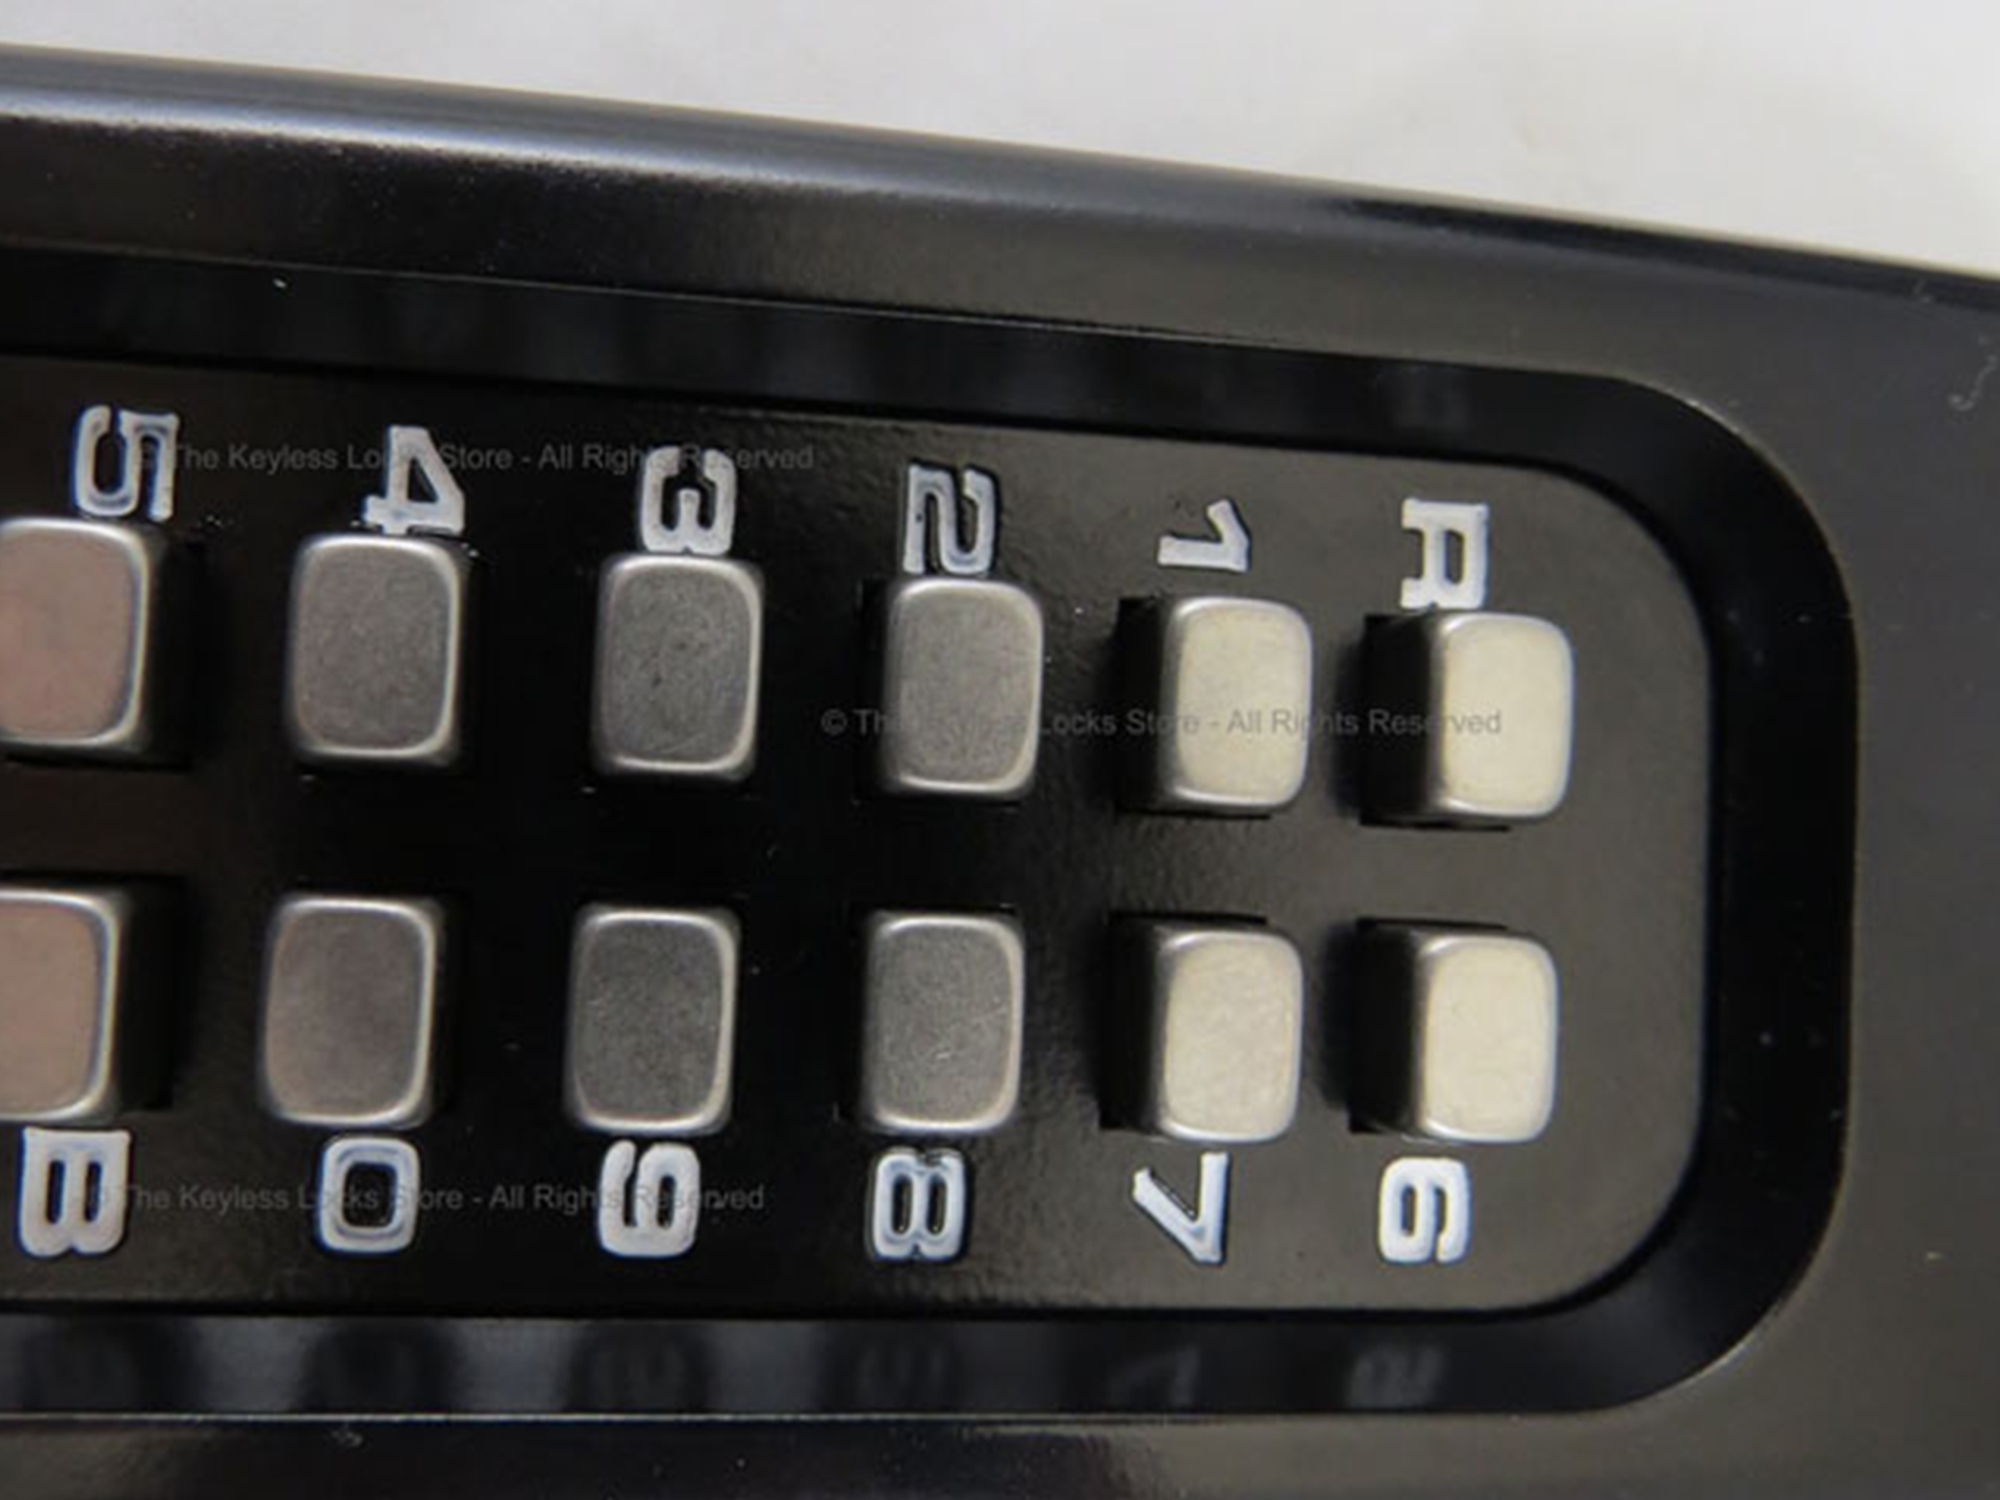 Lockey 160P Heavy-Duty Passage Knob-Handle Panic-Bar Keypad Lock